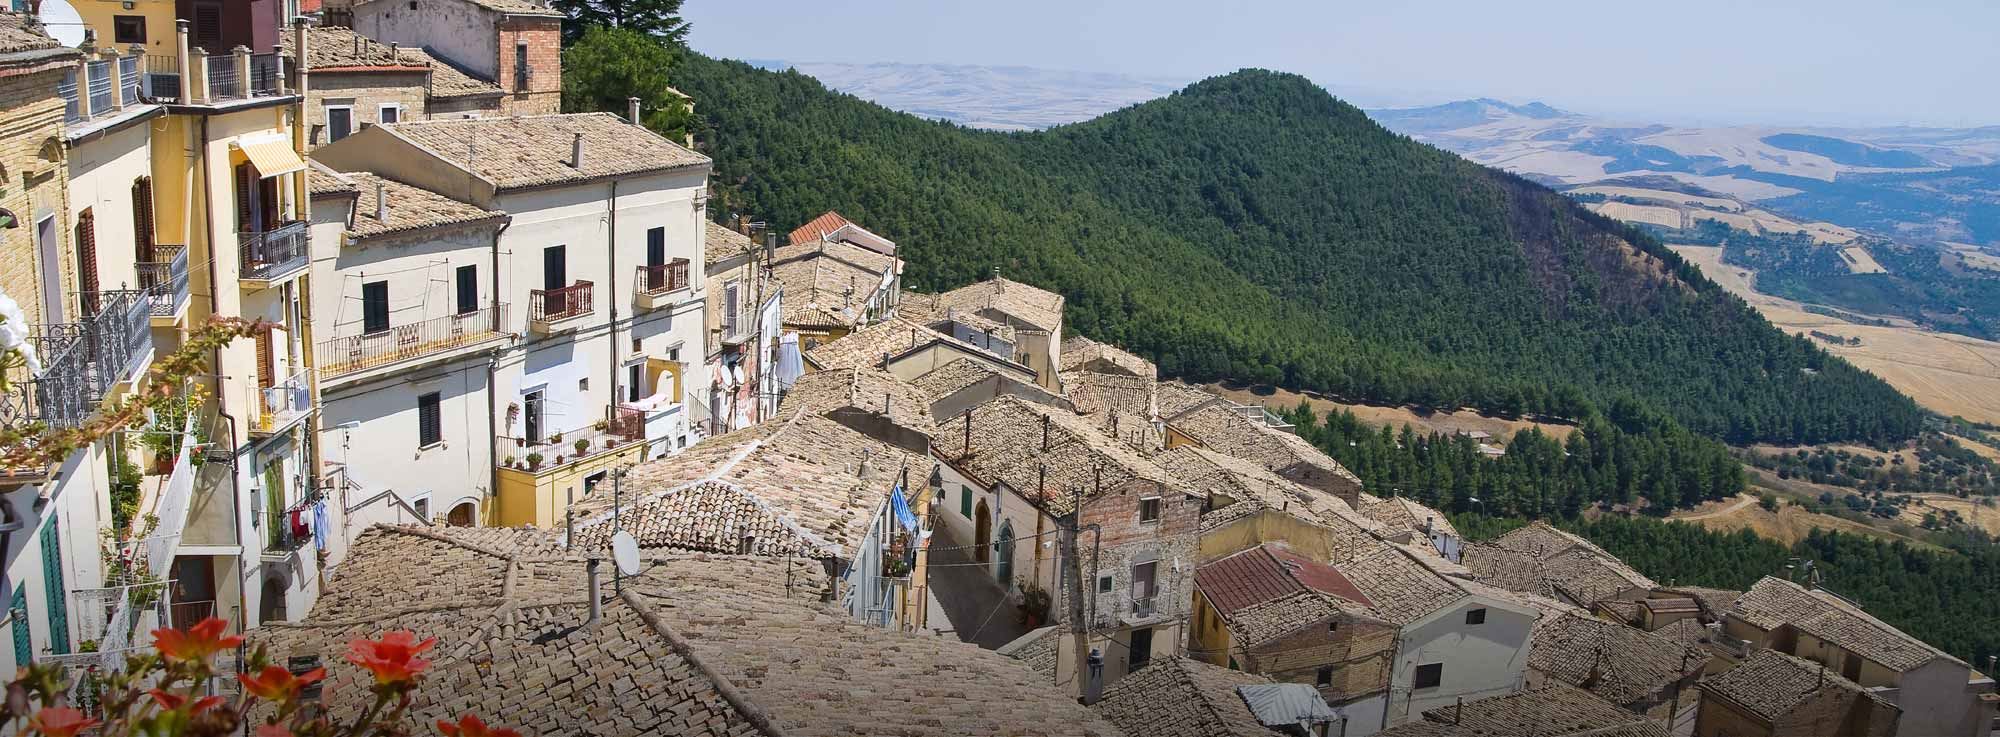 Sant'Agata di Puglia: Sagra dei Ciccecuòtte 